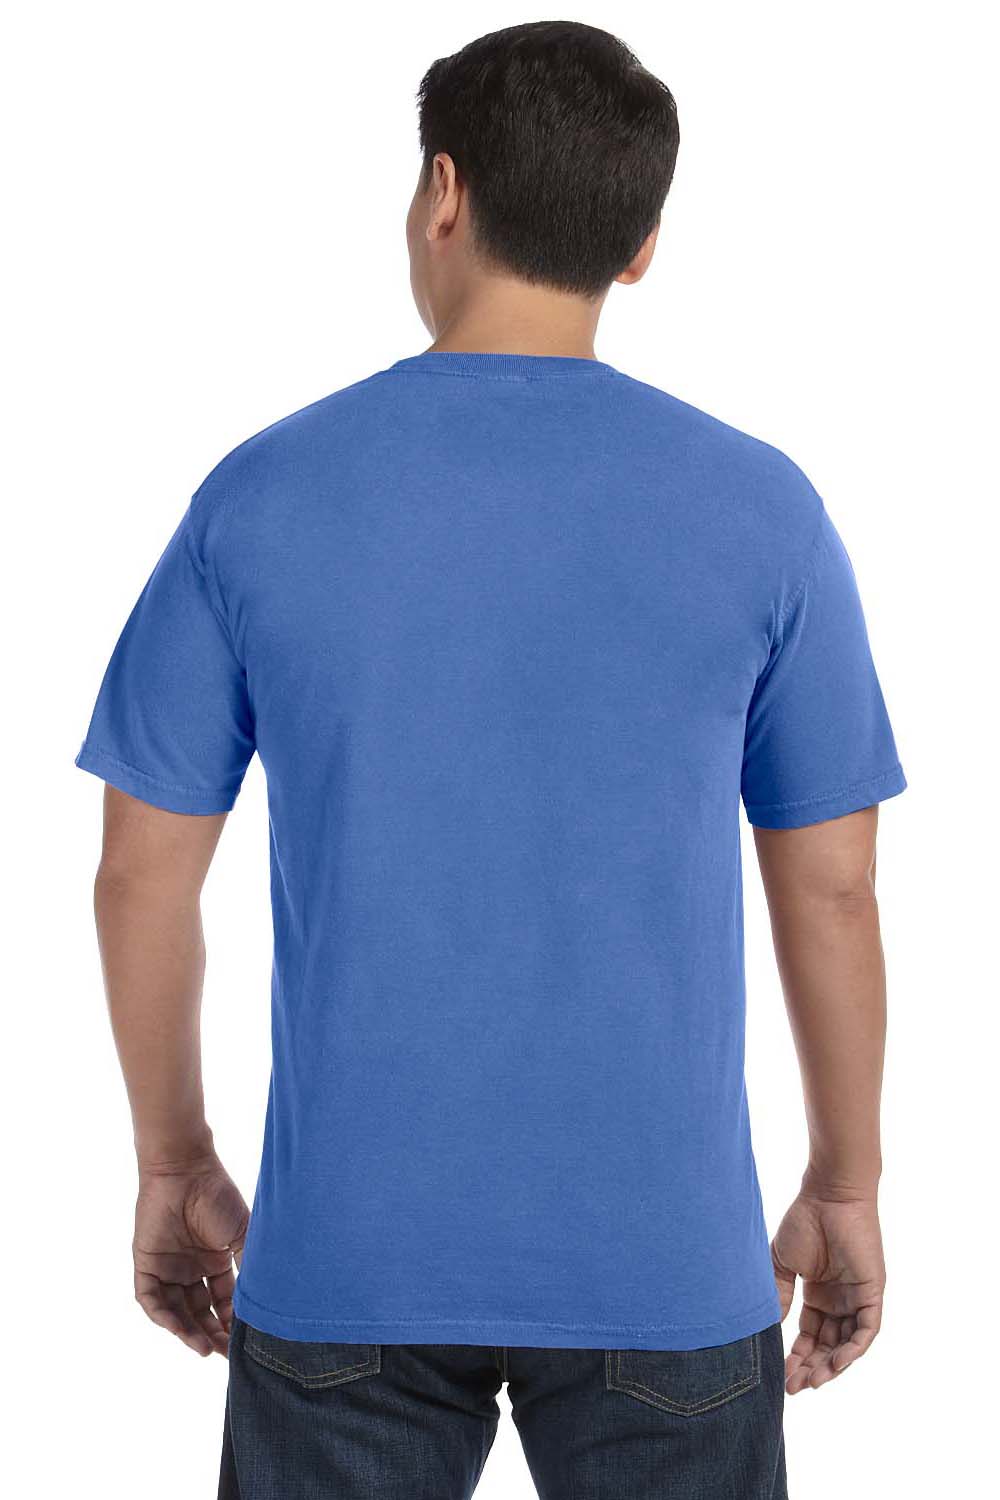 Comfort Colors C1717 Mens Short Sleeve Crewneck T-Shirt Neon Blue Back